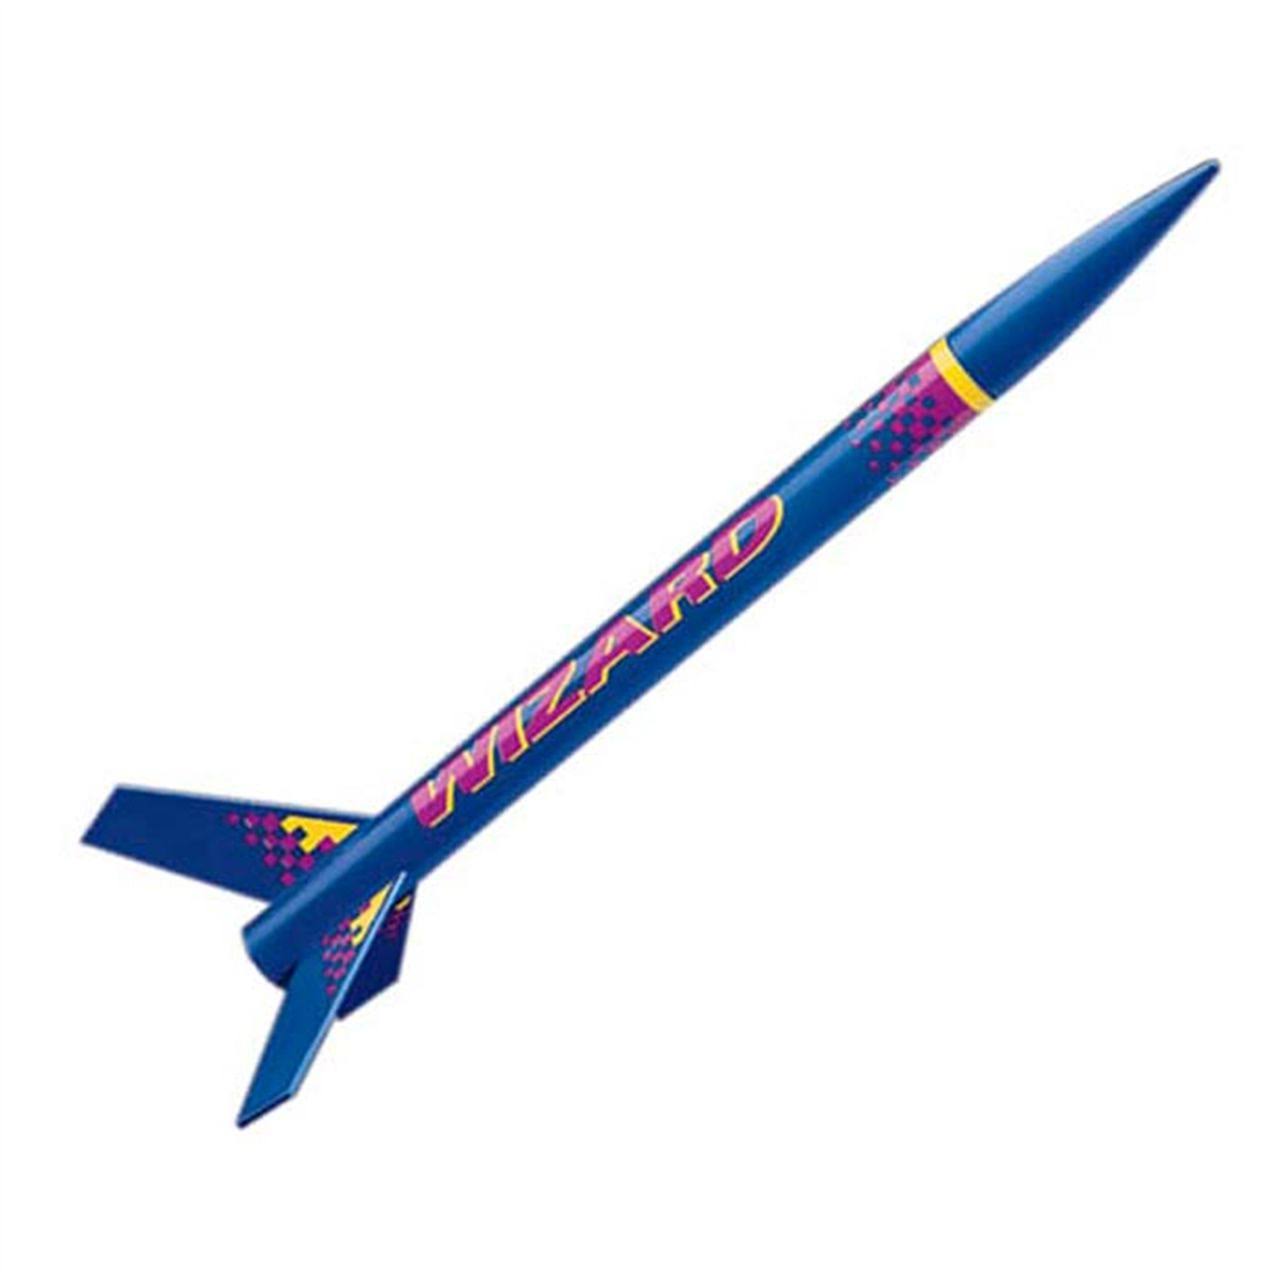 Estes 1292 Wizard Flying Model Rocket Kit Toy